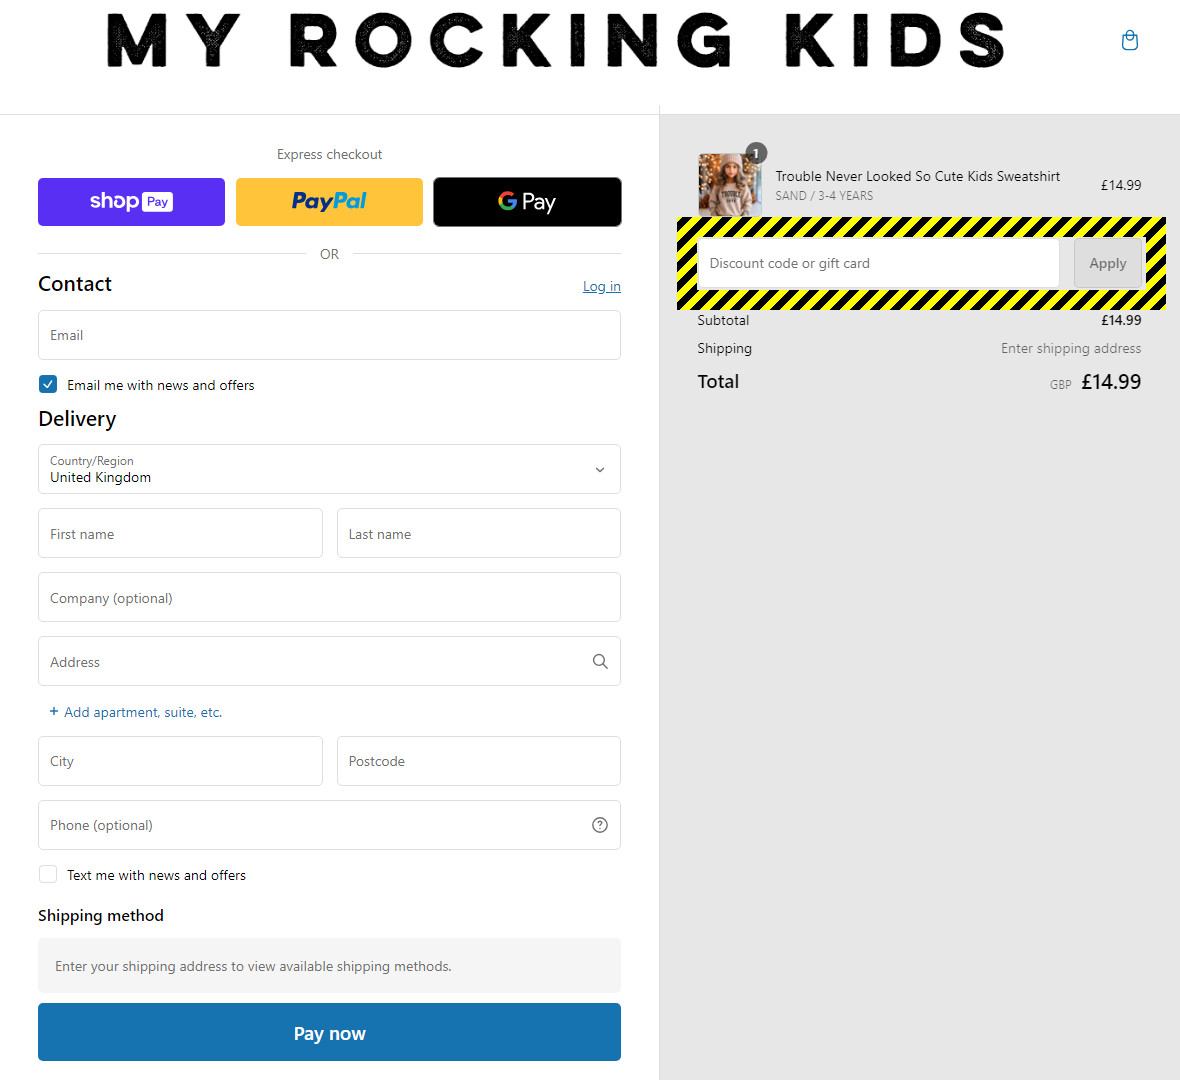 My Rocking Kids Discount Code